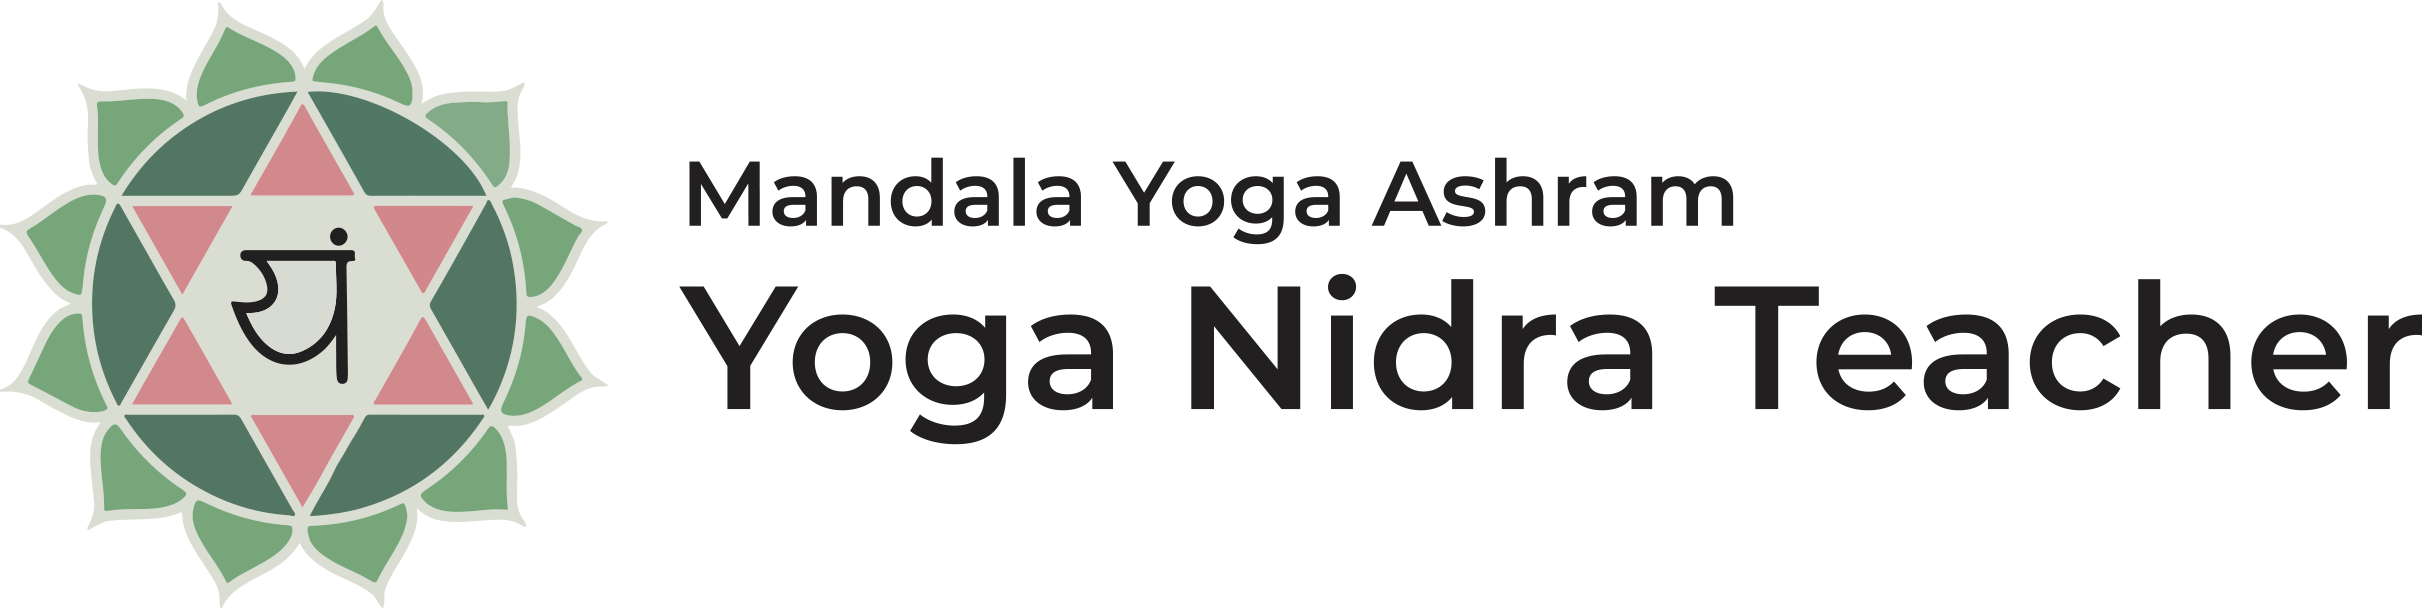 MYA Yoga Nidra Teacher LOGO22